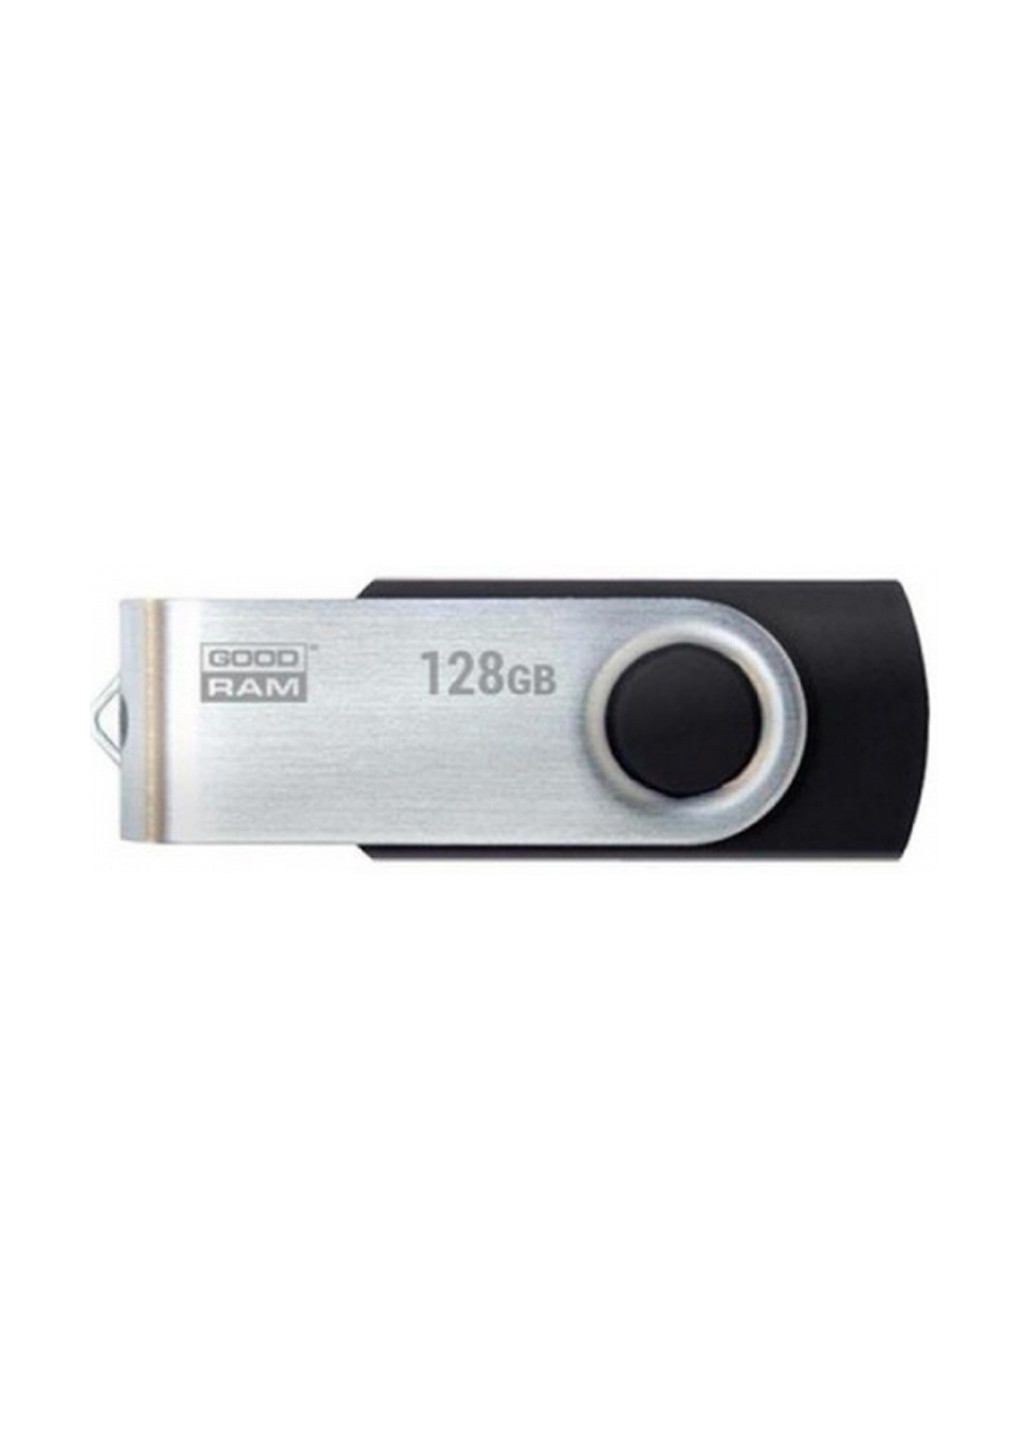 Флеш память USB Twister 128GB (UTS2-1280K0R11) Goodram флеш память usb goodram twister 128gb (uts2-1280k0r11) (136742765)